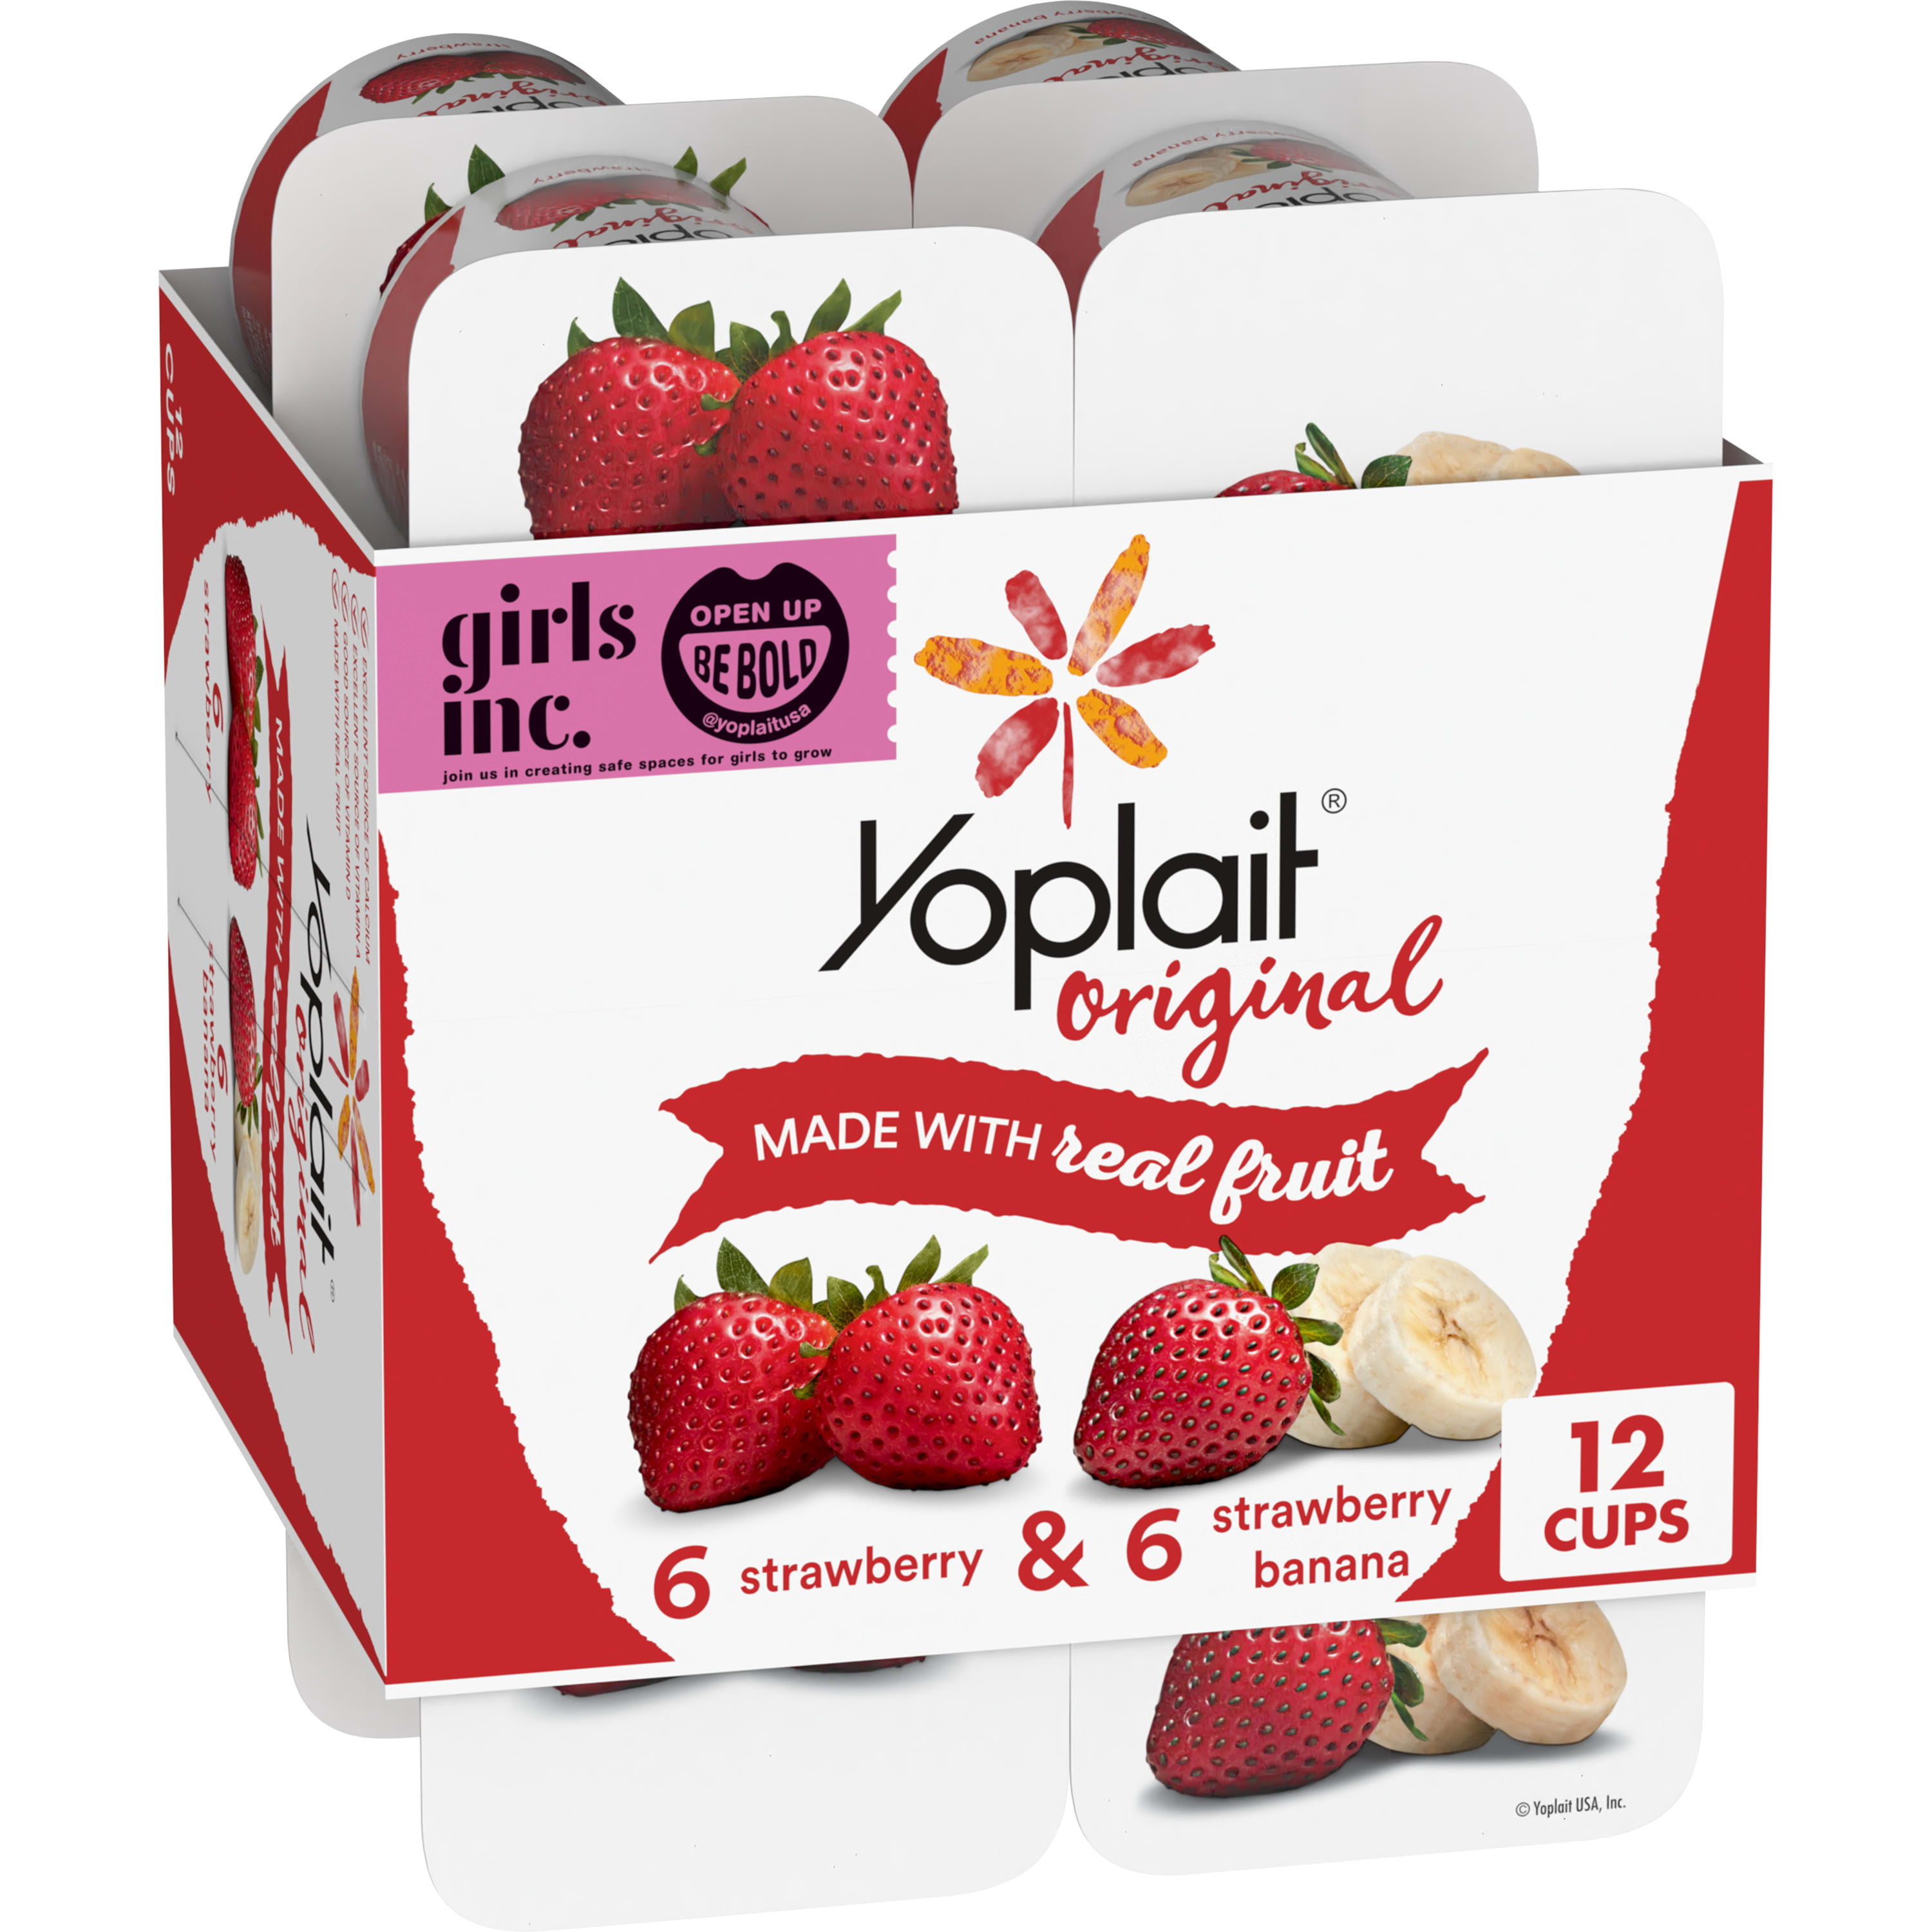 Activia Strawberry and Strawberry Banana Probiotic Yogurt, Lowfat Yogurt  Cups, 4 oz, 12 Count